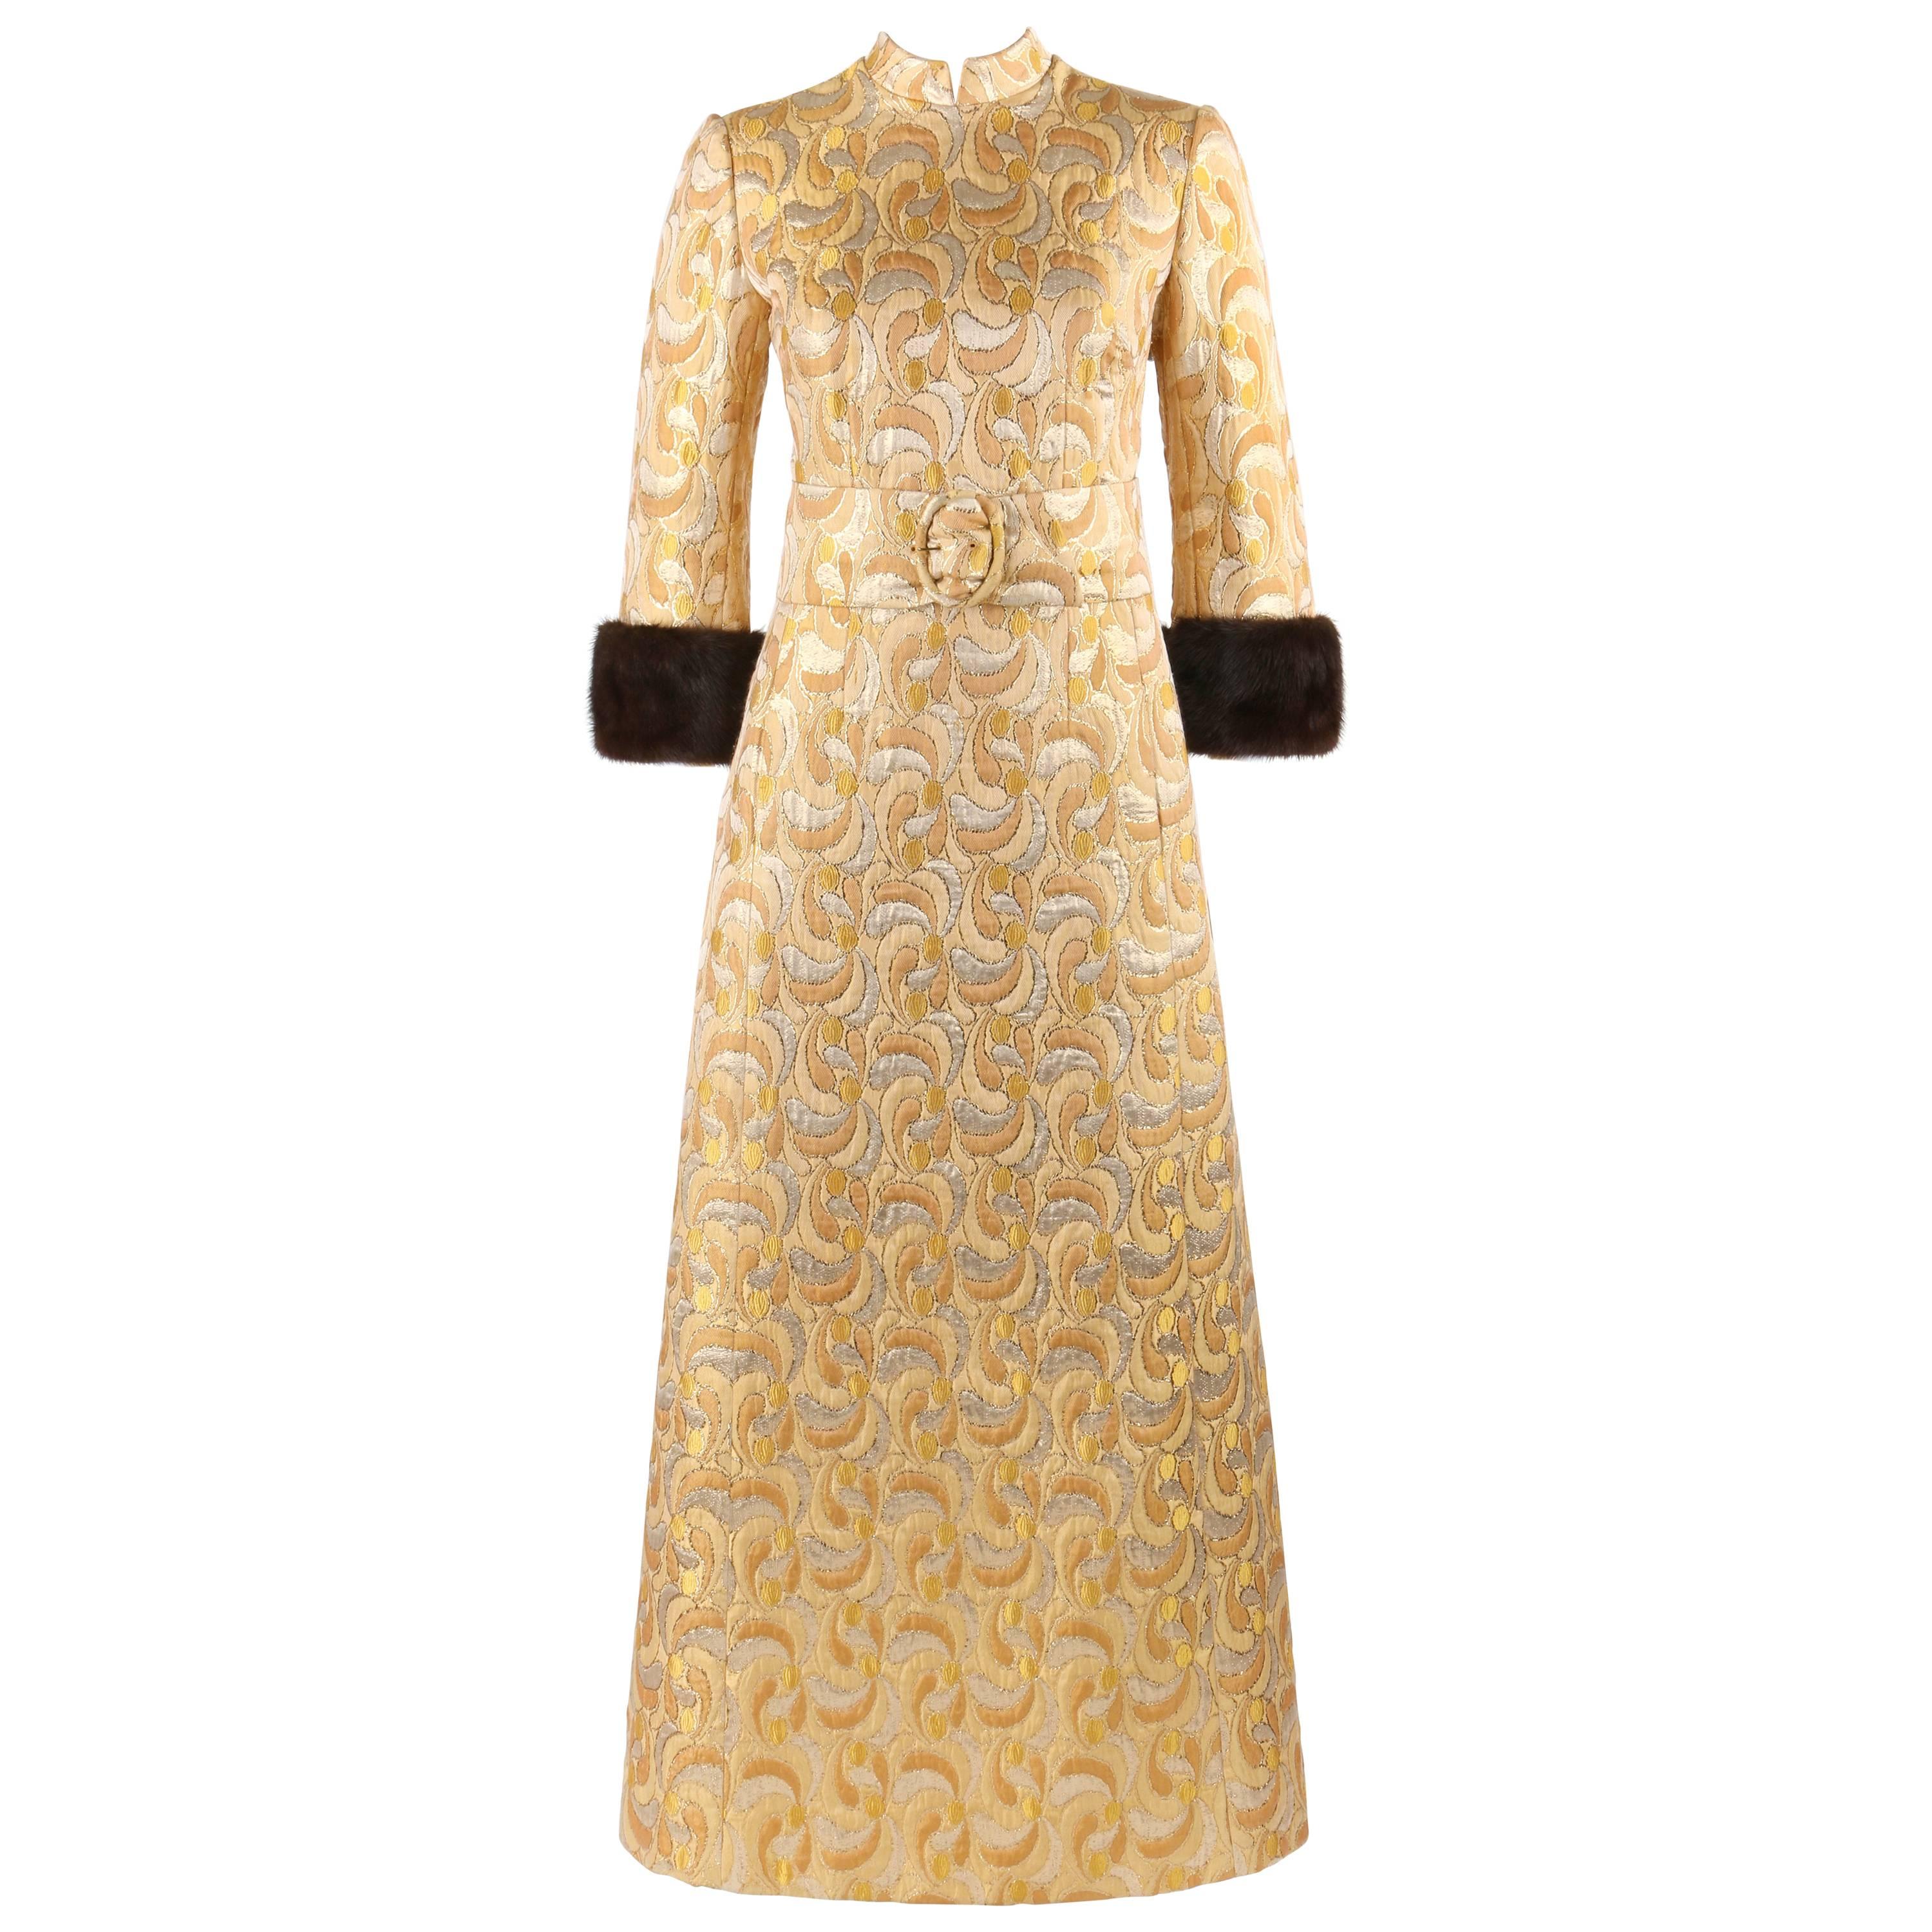 LILLIE RUBIN c.1960's Metallic Brocade Mink Fur Cuff Belted Caftan Evening Dress